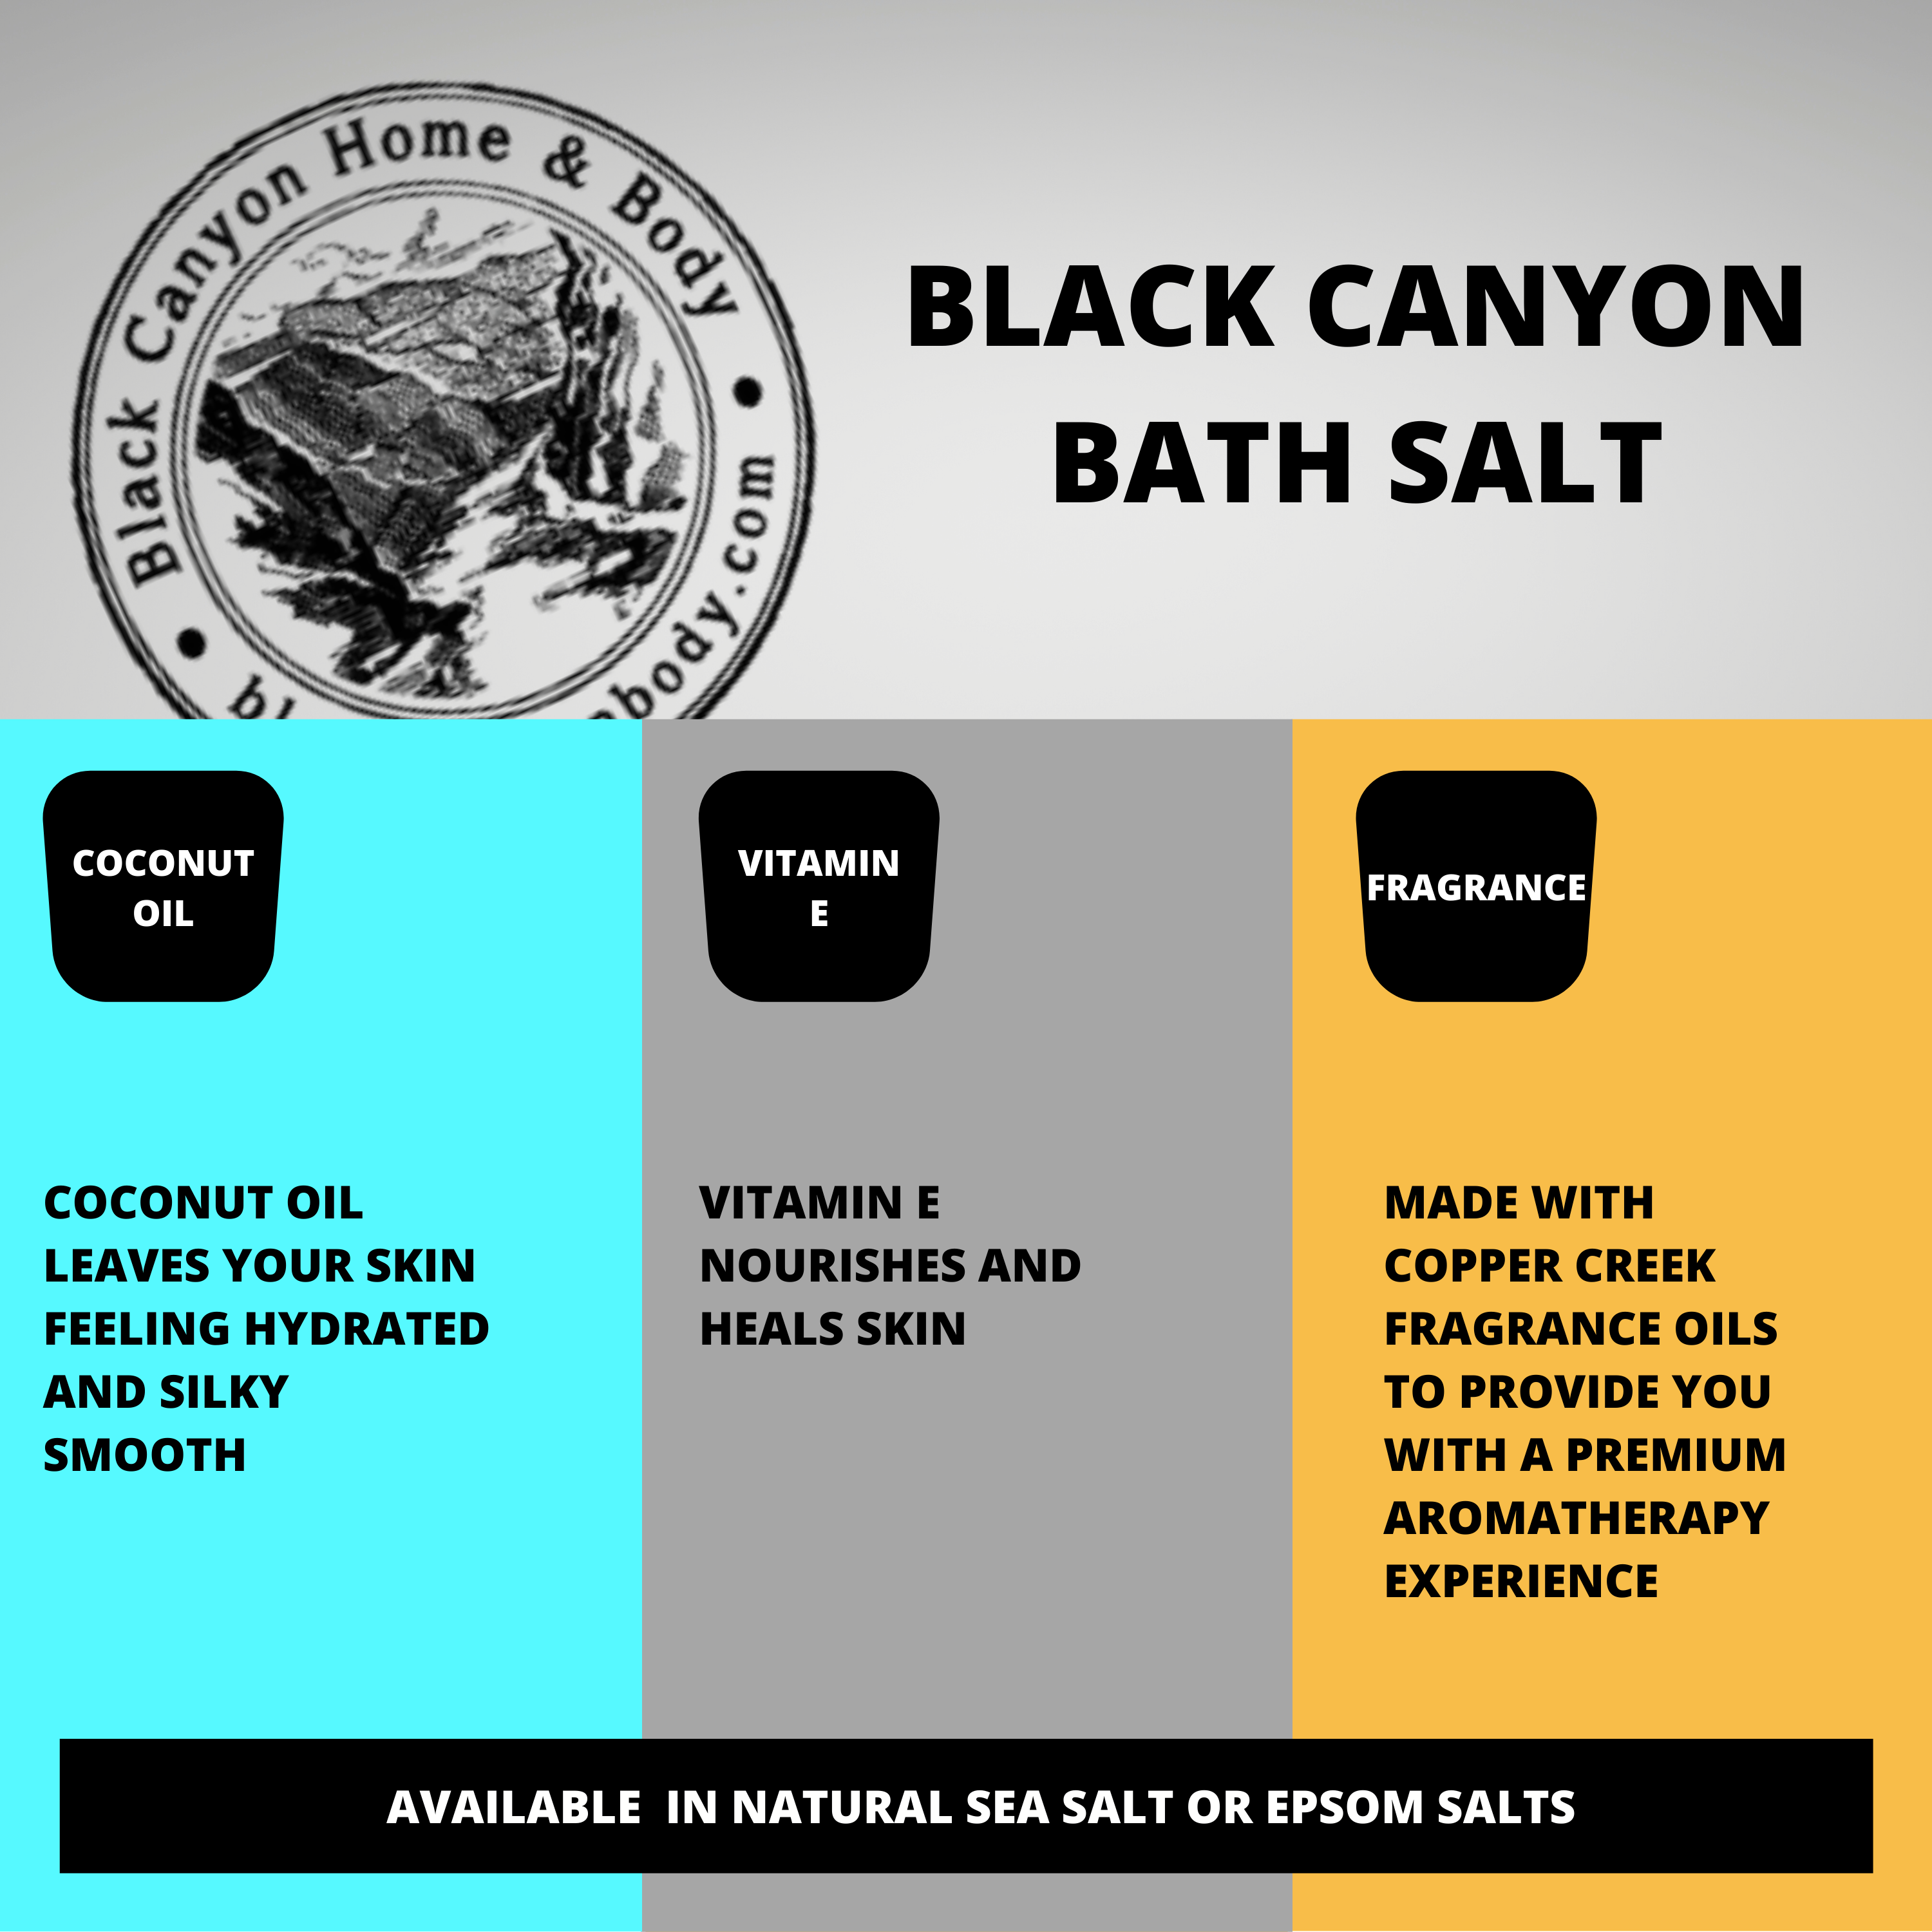 Black Canyon Christmas Candy Cane Scented Sea Salt Bath Soak